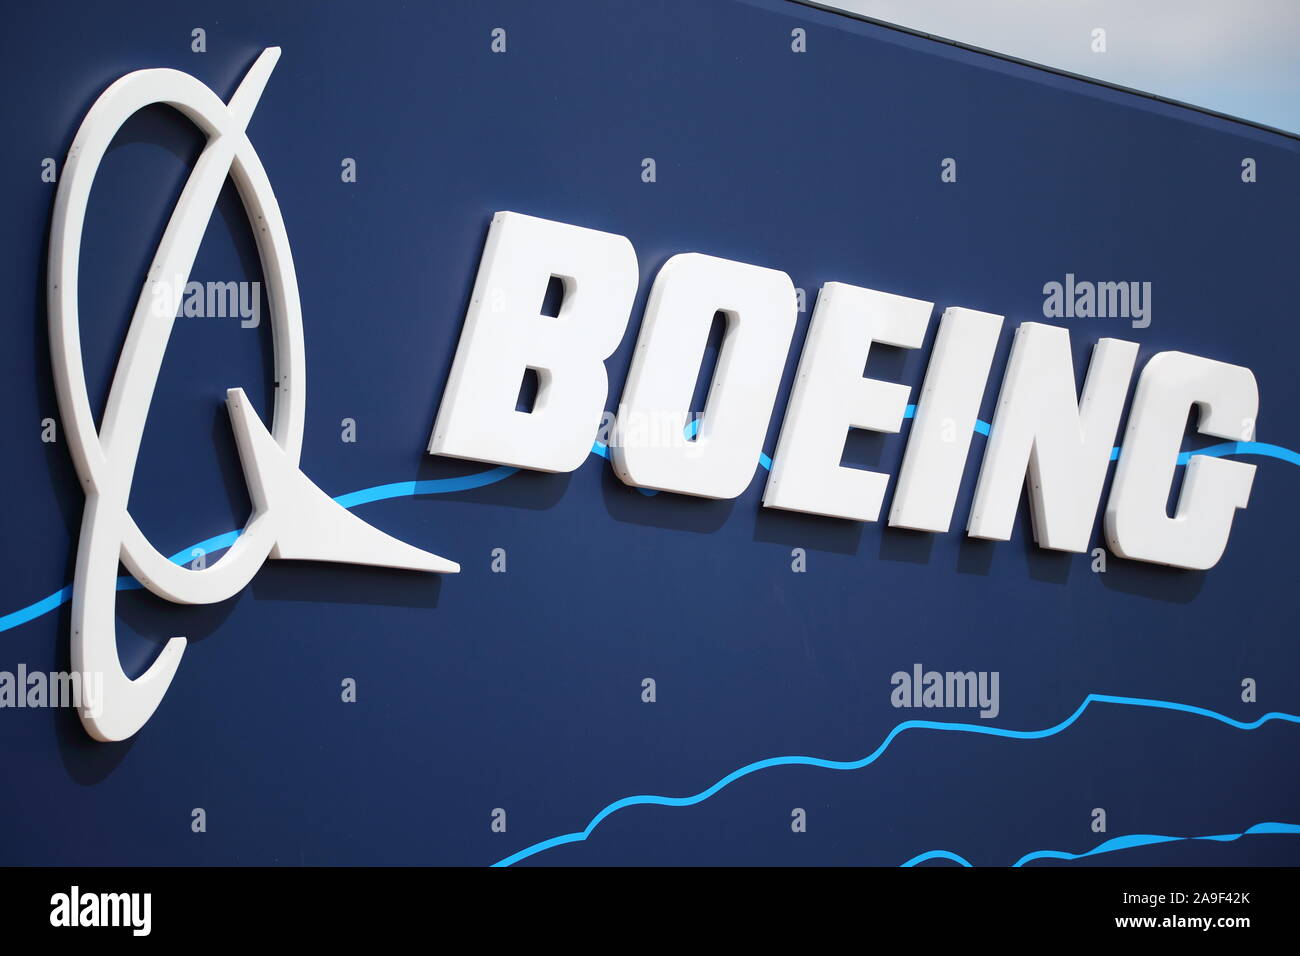 Boeing Logo at their pavilion at the Farnborough International Airshow 2018, UK Stock Photo